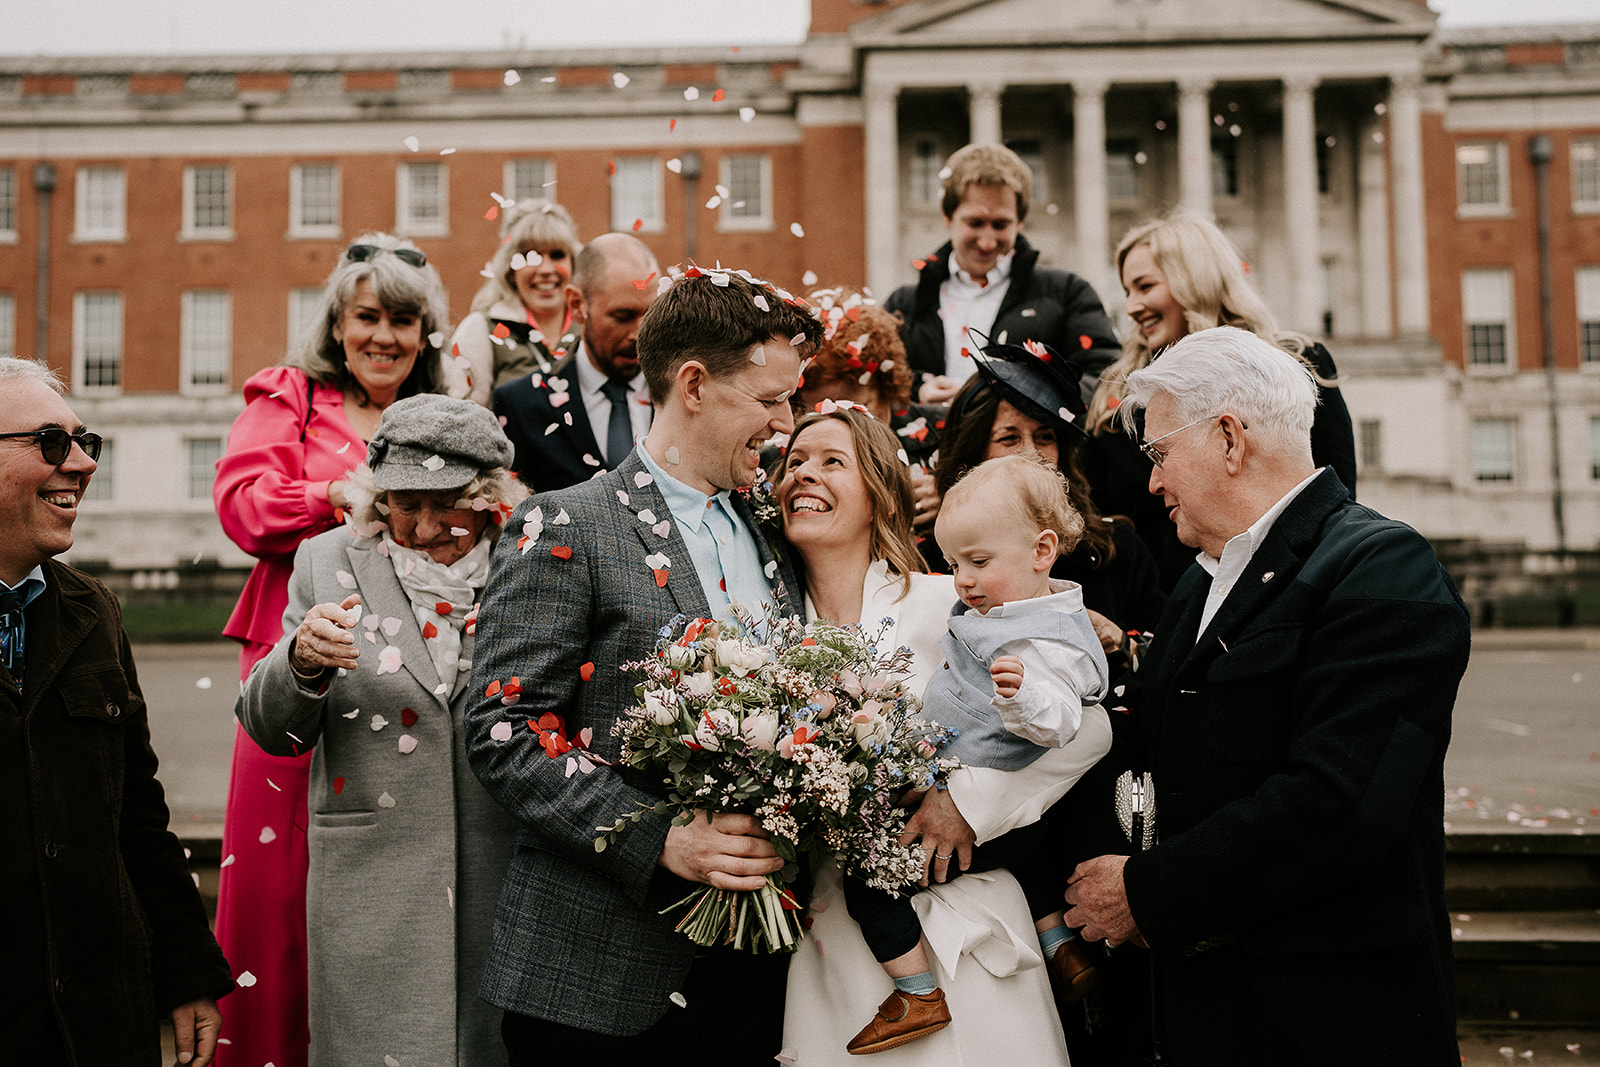 Chesterfield Town Hall Wedding Photography | Micro Wedding